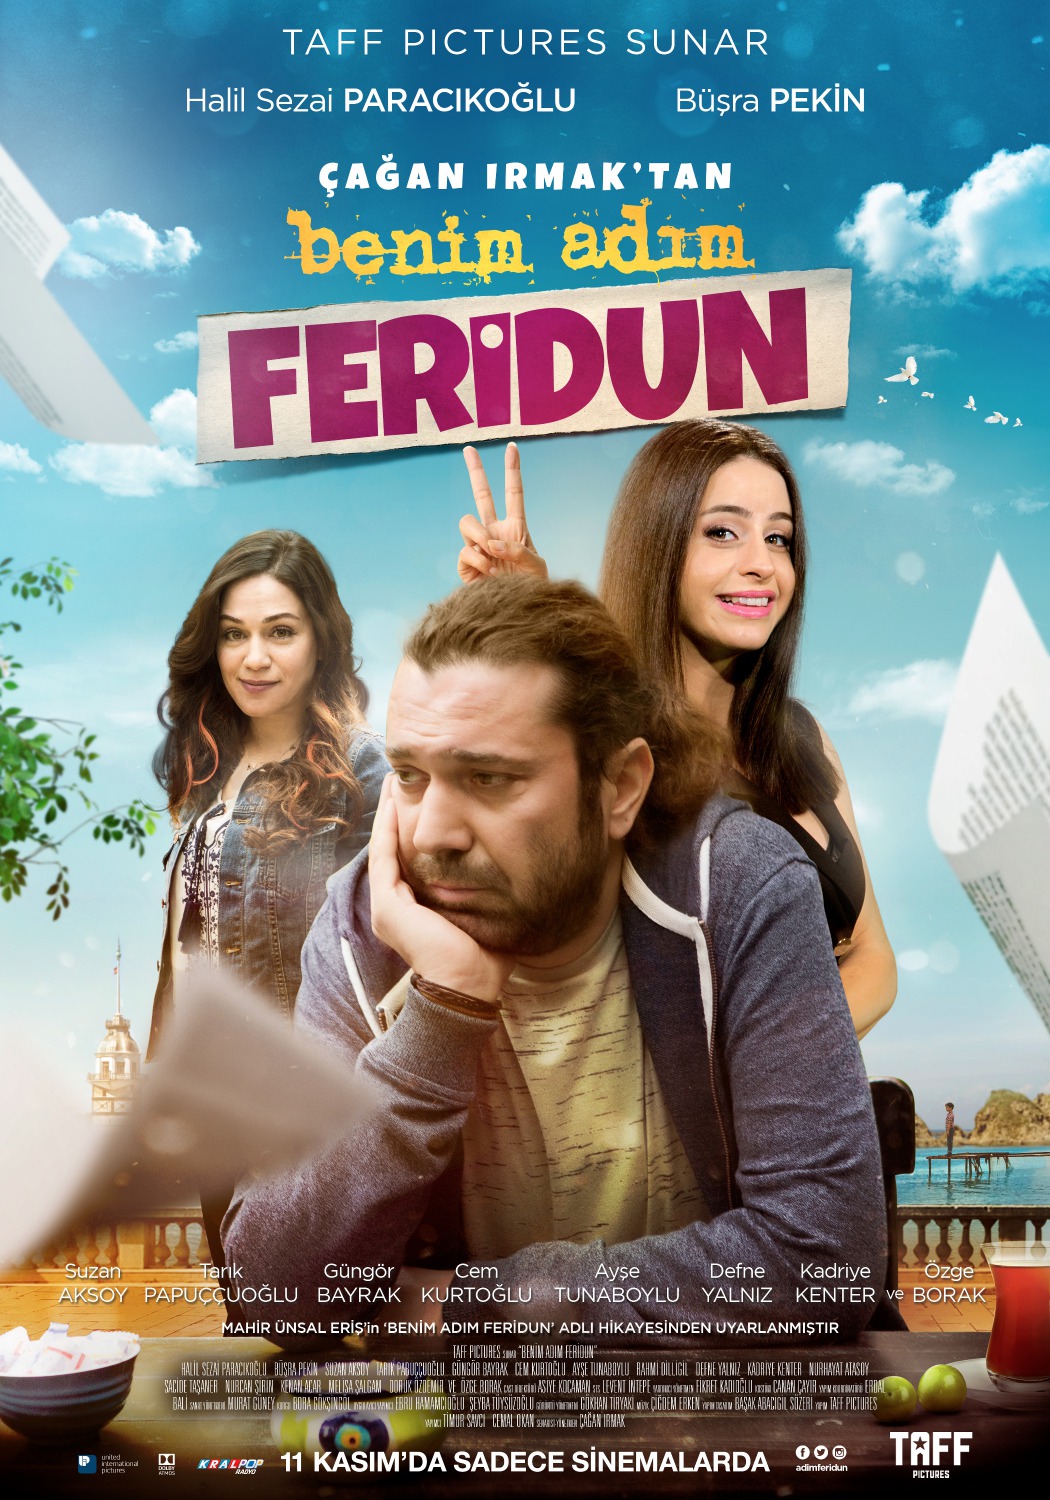 Extra Large Movie Poster Image for Benim Adim Feridun 